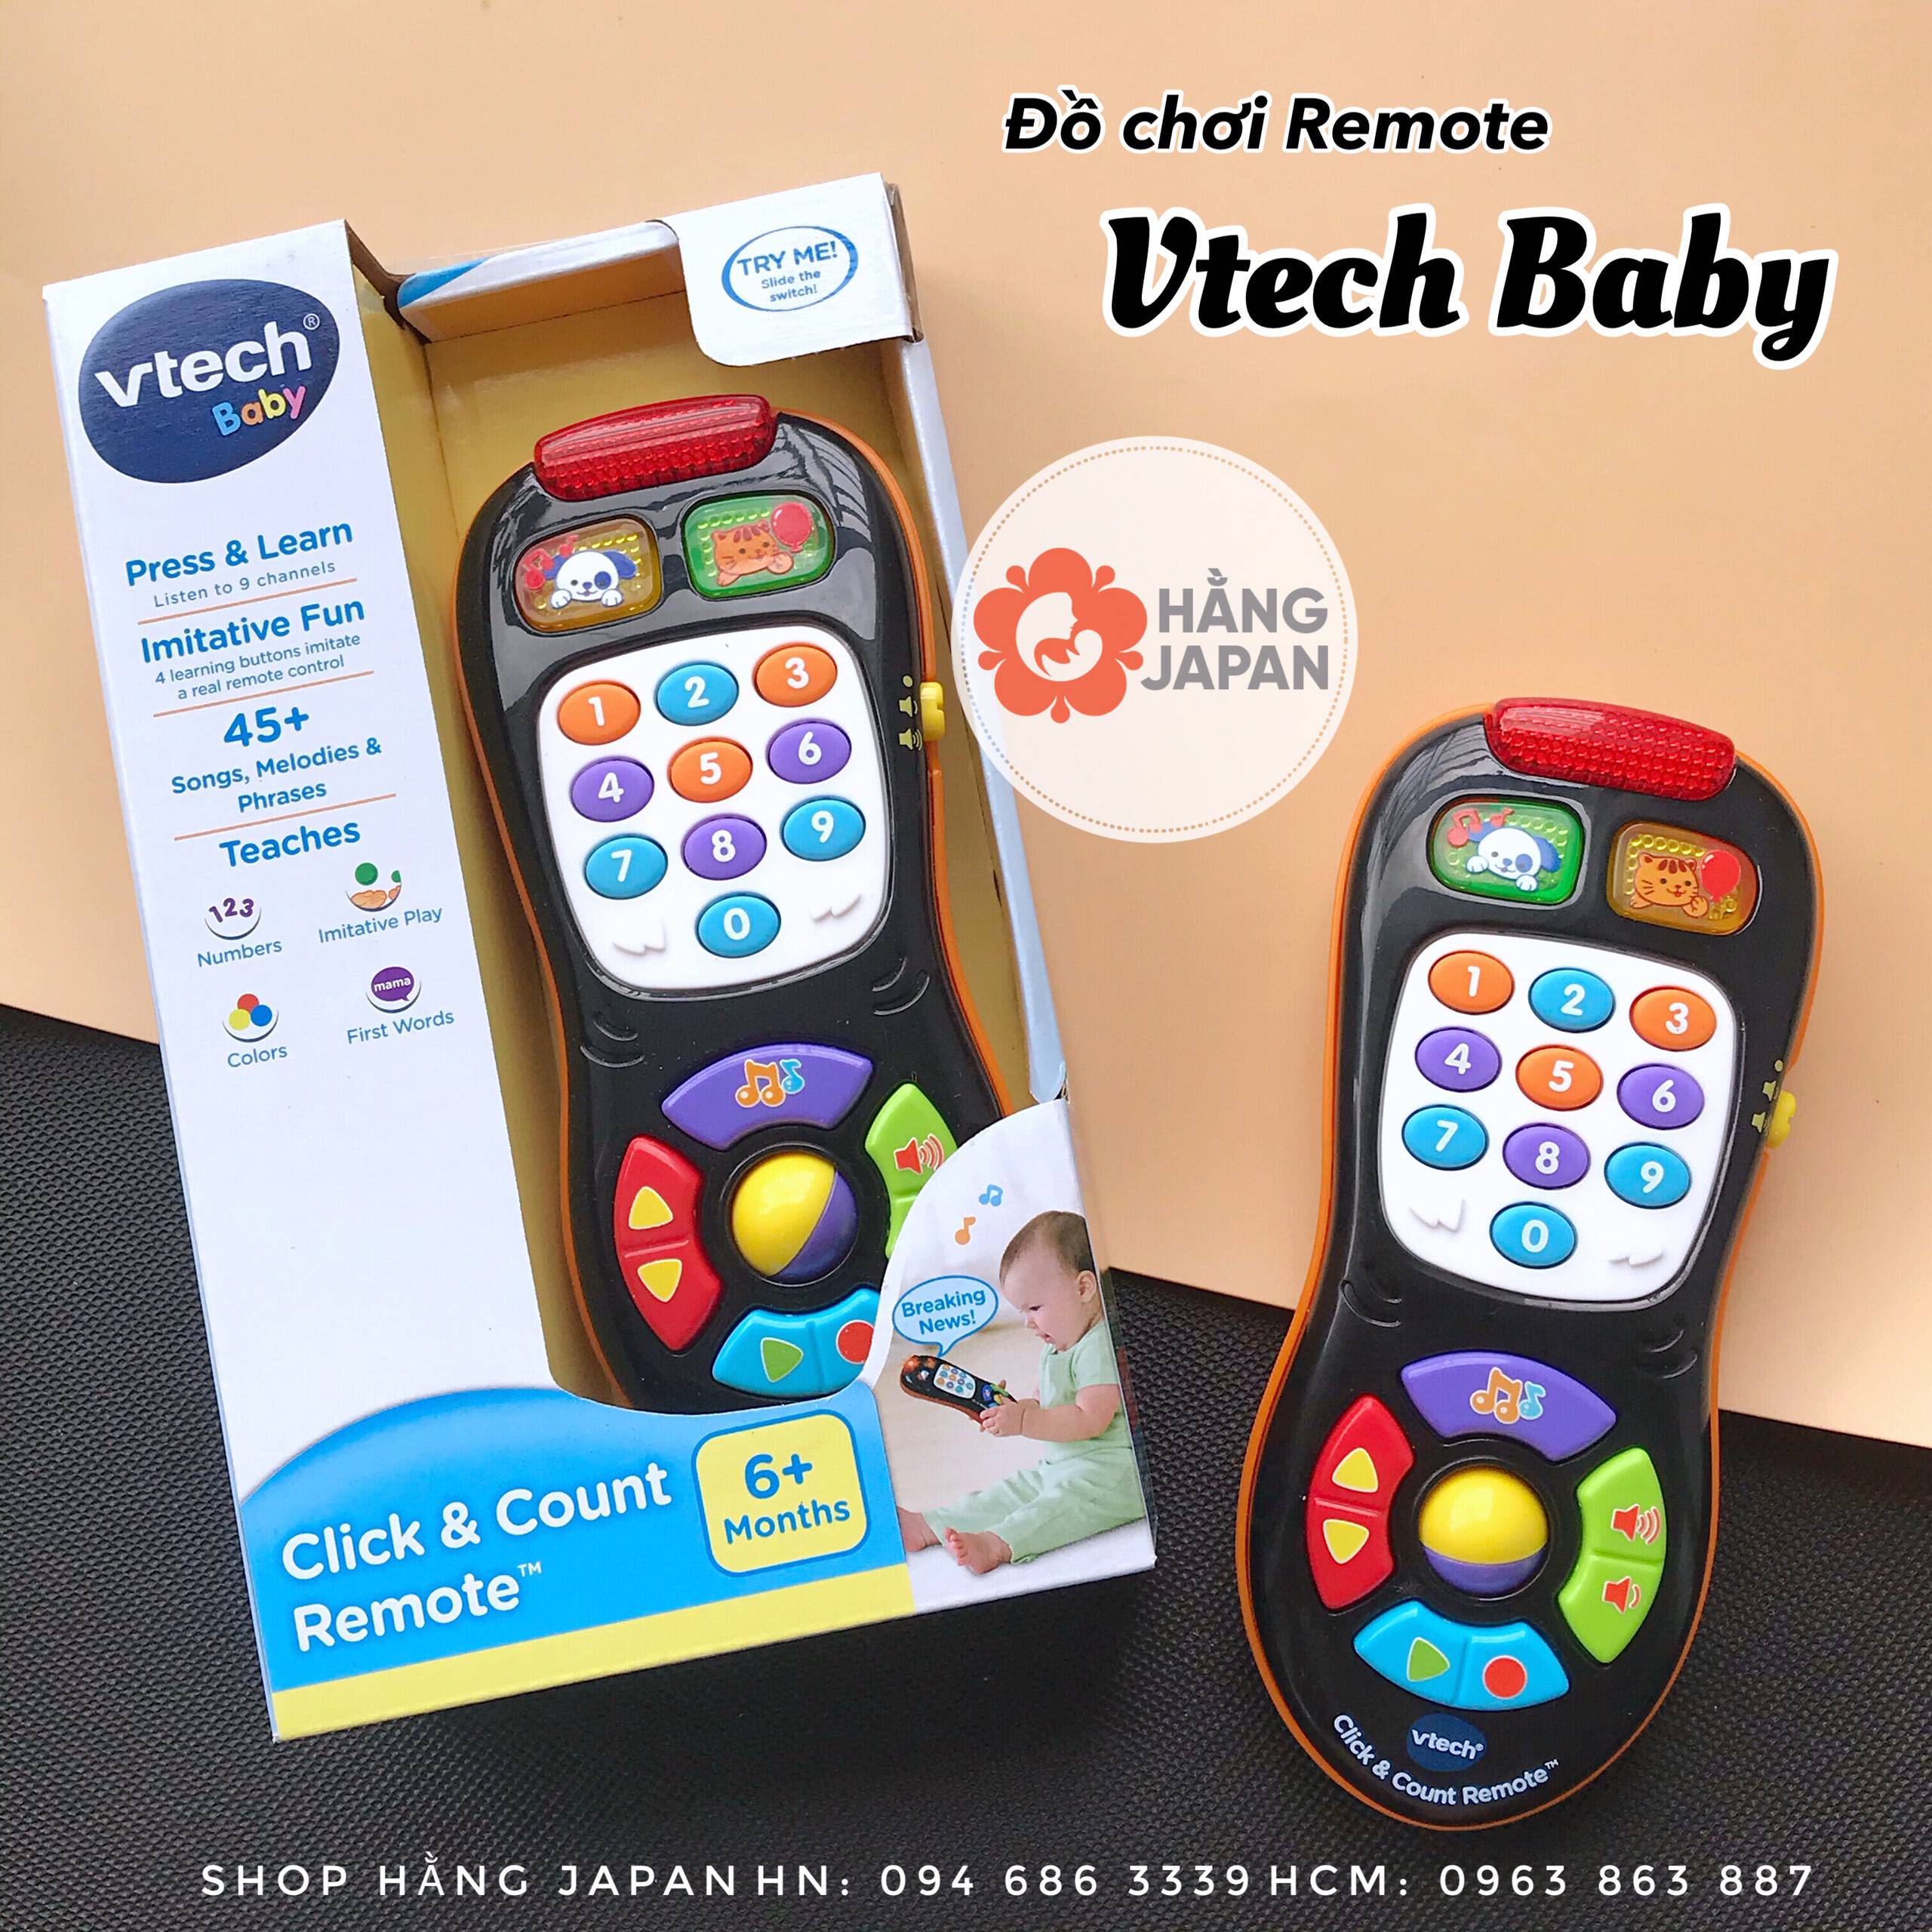 Đồ chơi remote Vtech Baby cho bé